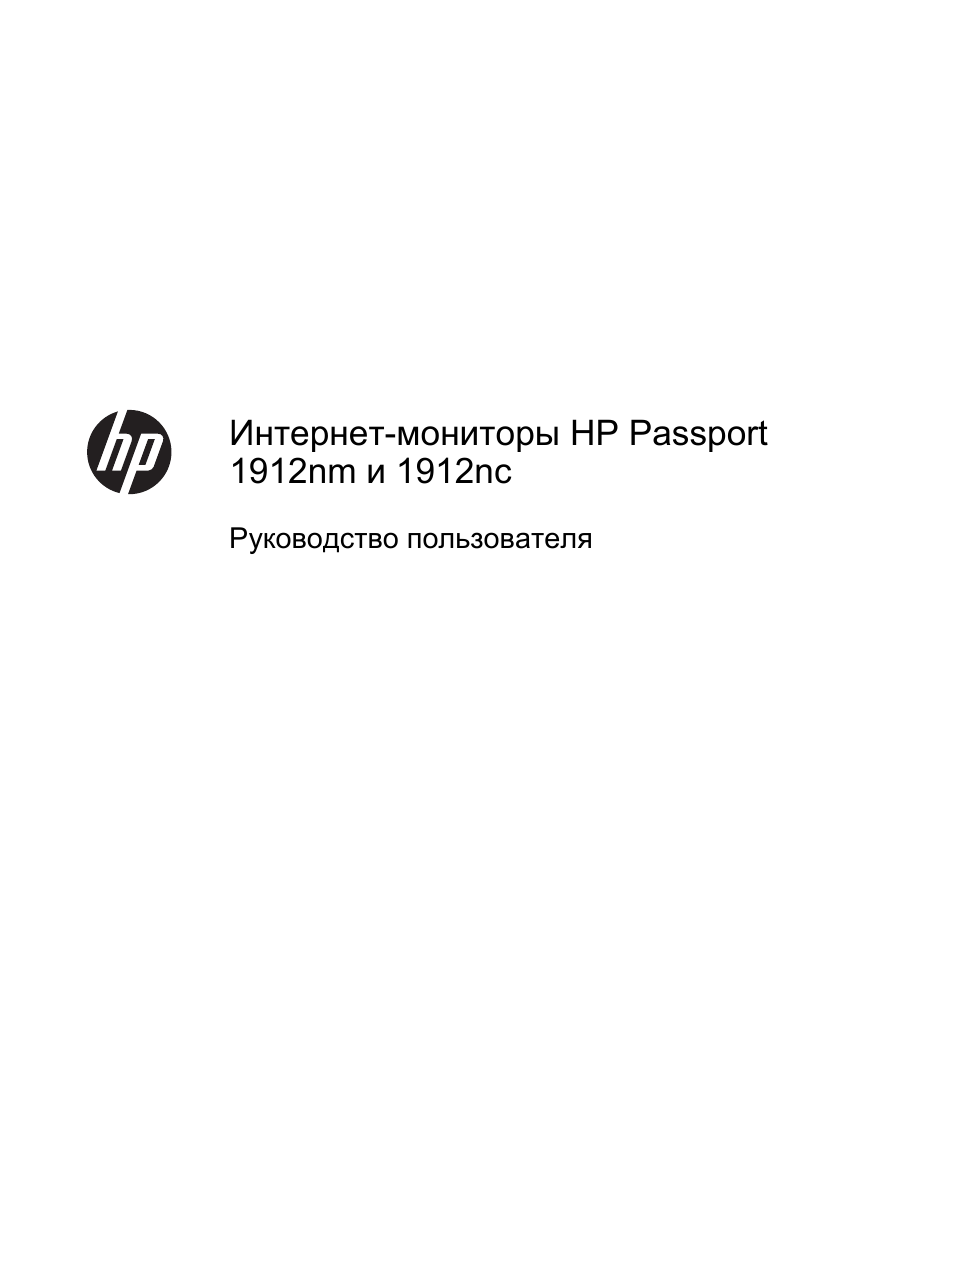 Инструкция по эксплуатации HP Интернет-монитор HP Passport 1912nm 185 inch | 35 страниц